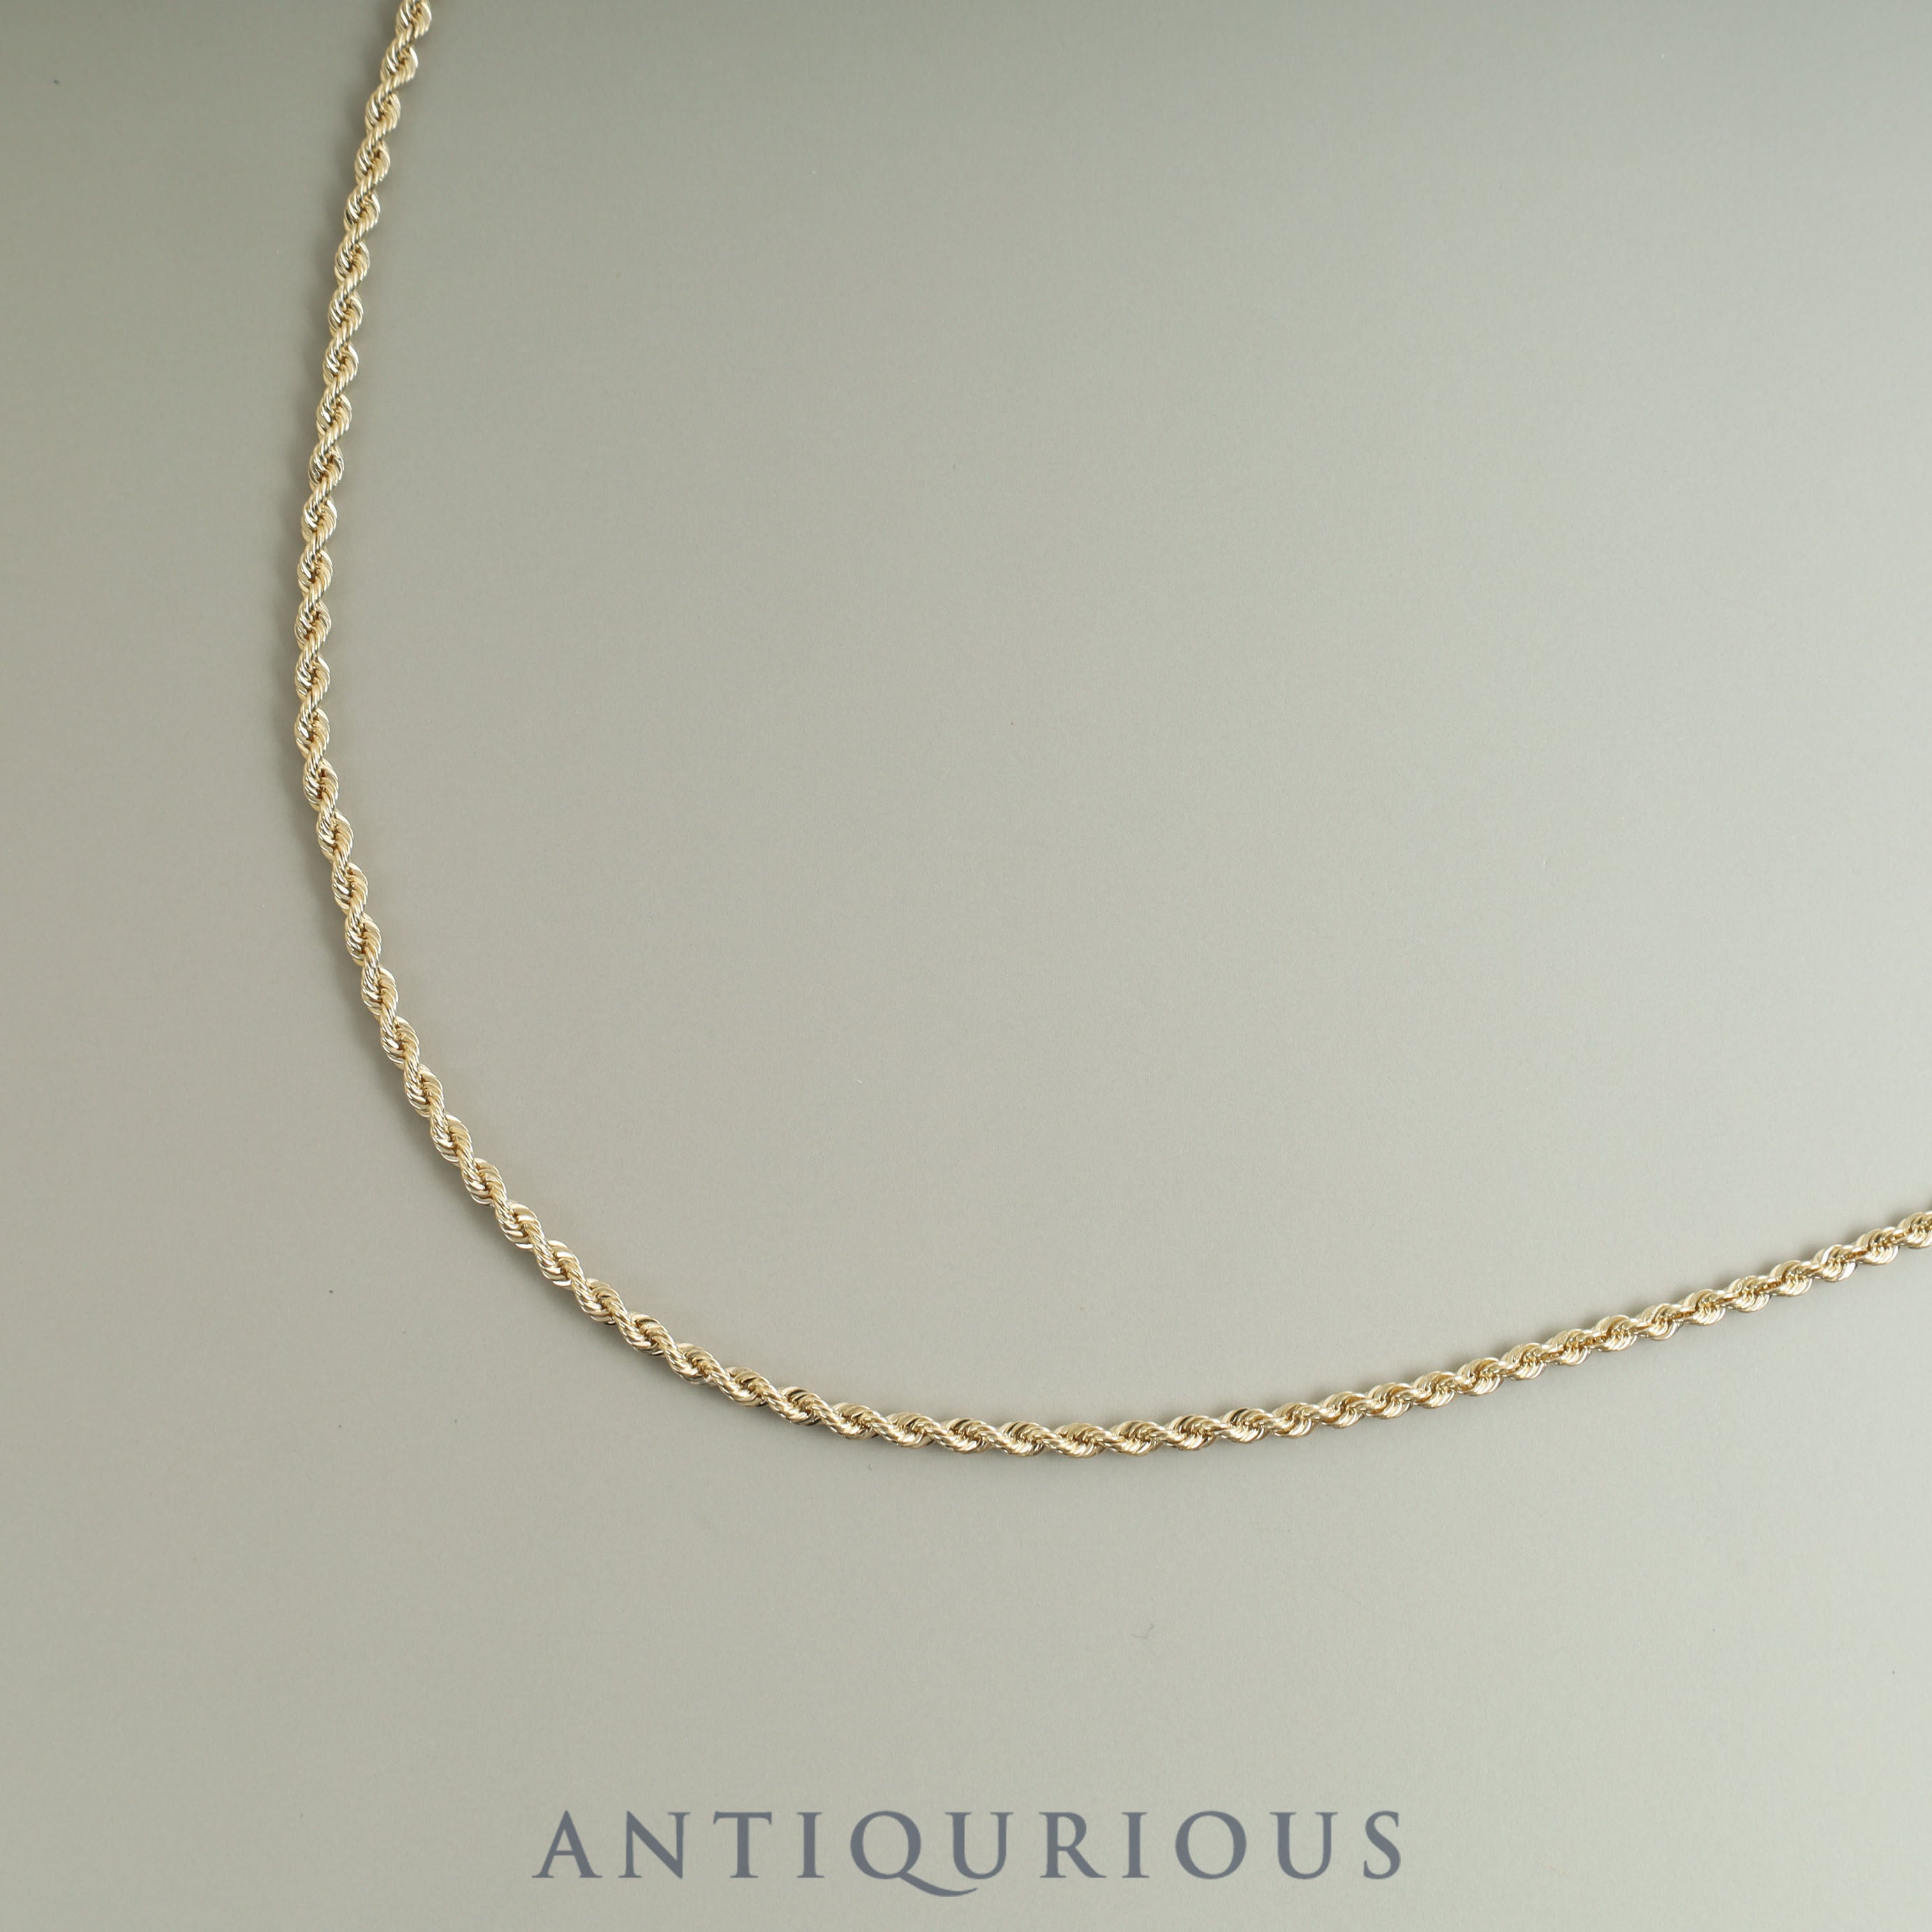 TIFFANY Tiffany necklace long chain vintage